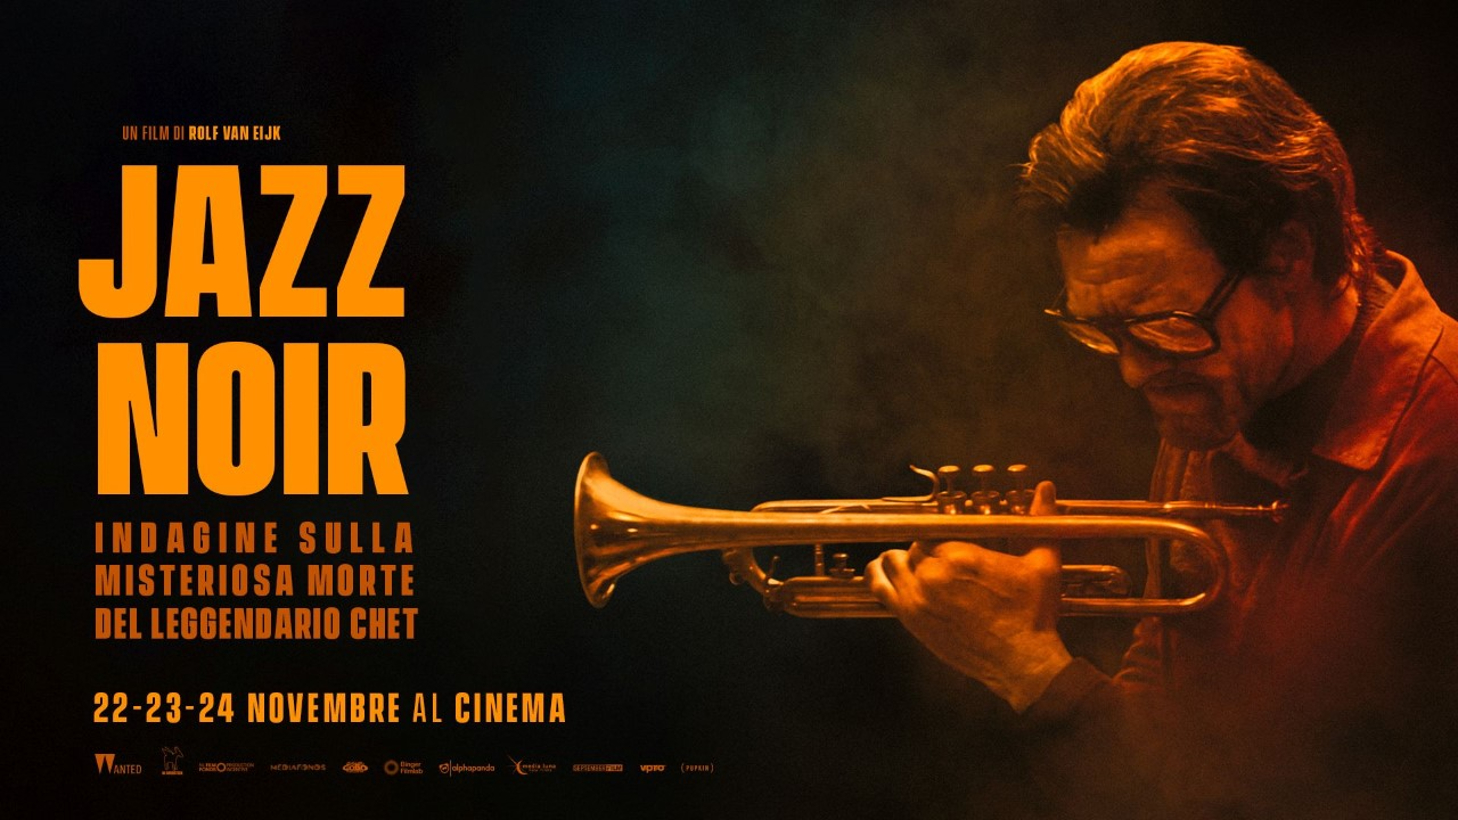 Chet Baker, la vita dell'icona jazz arriva al cinema